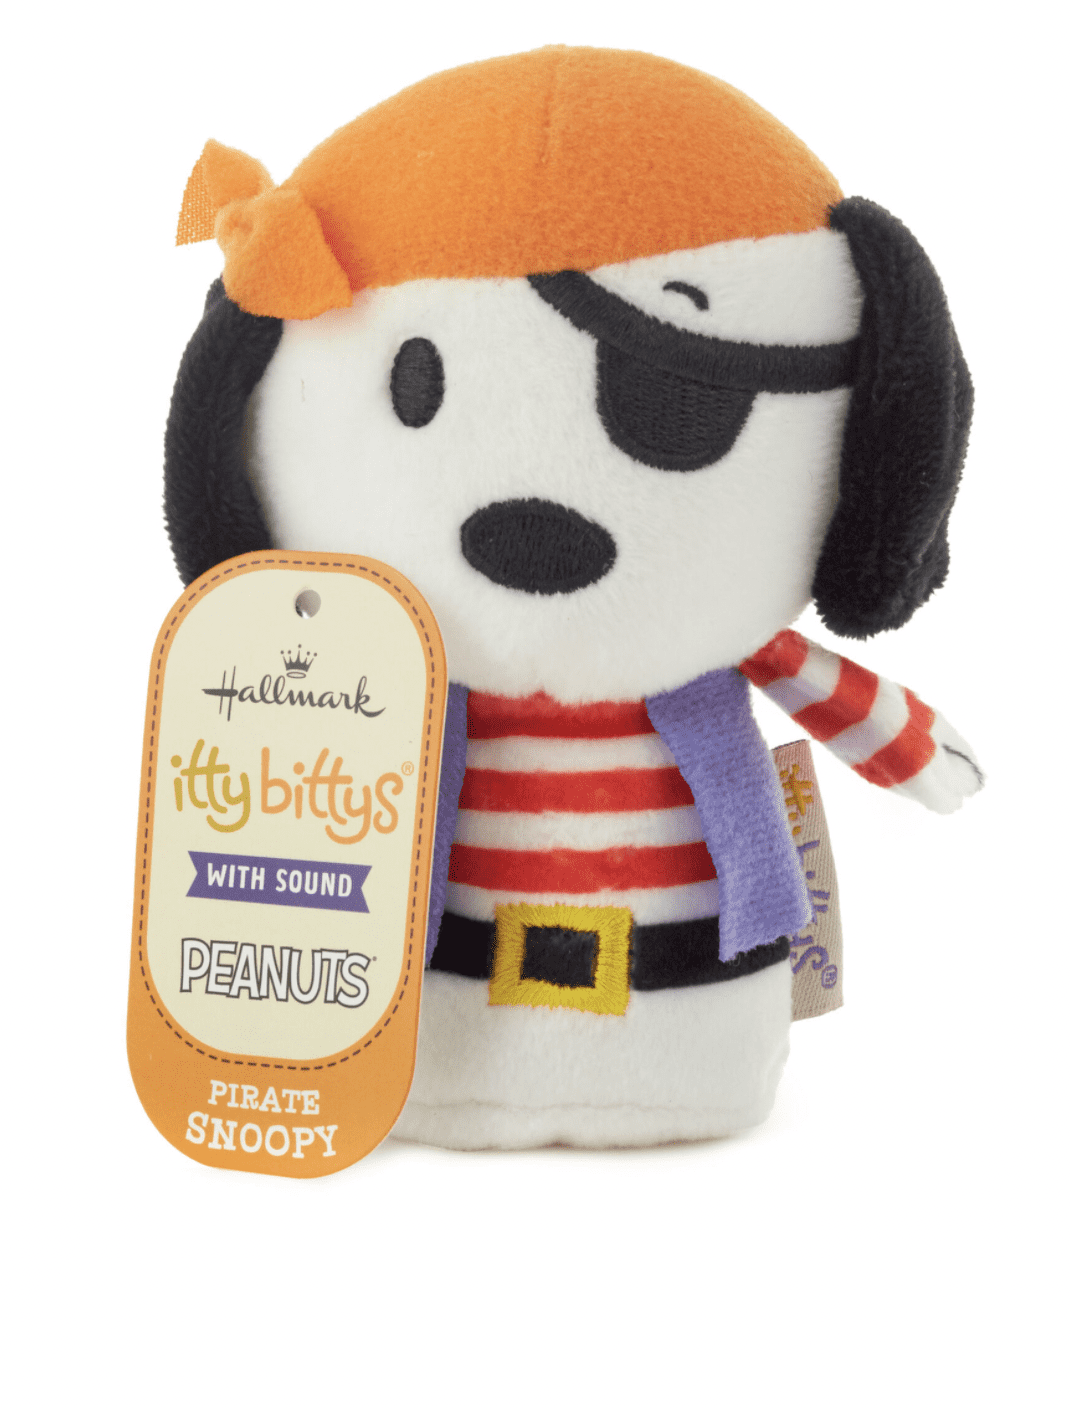 Hallmark Halloween Itty Bittys Peanuts Snoopy Pirate Plush With